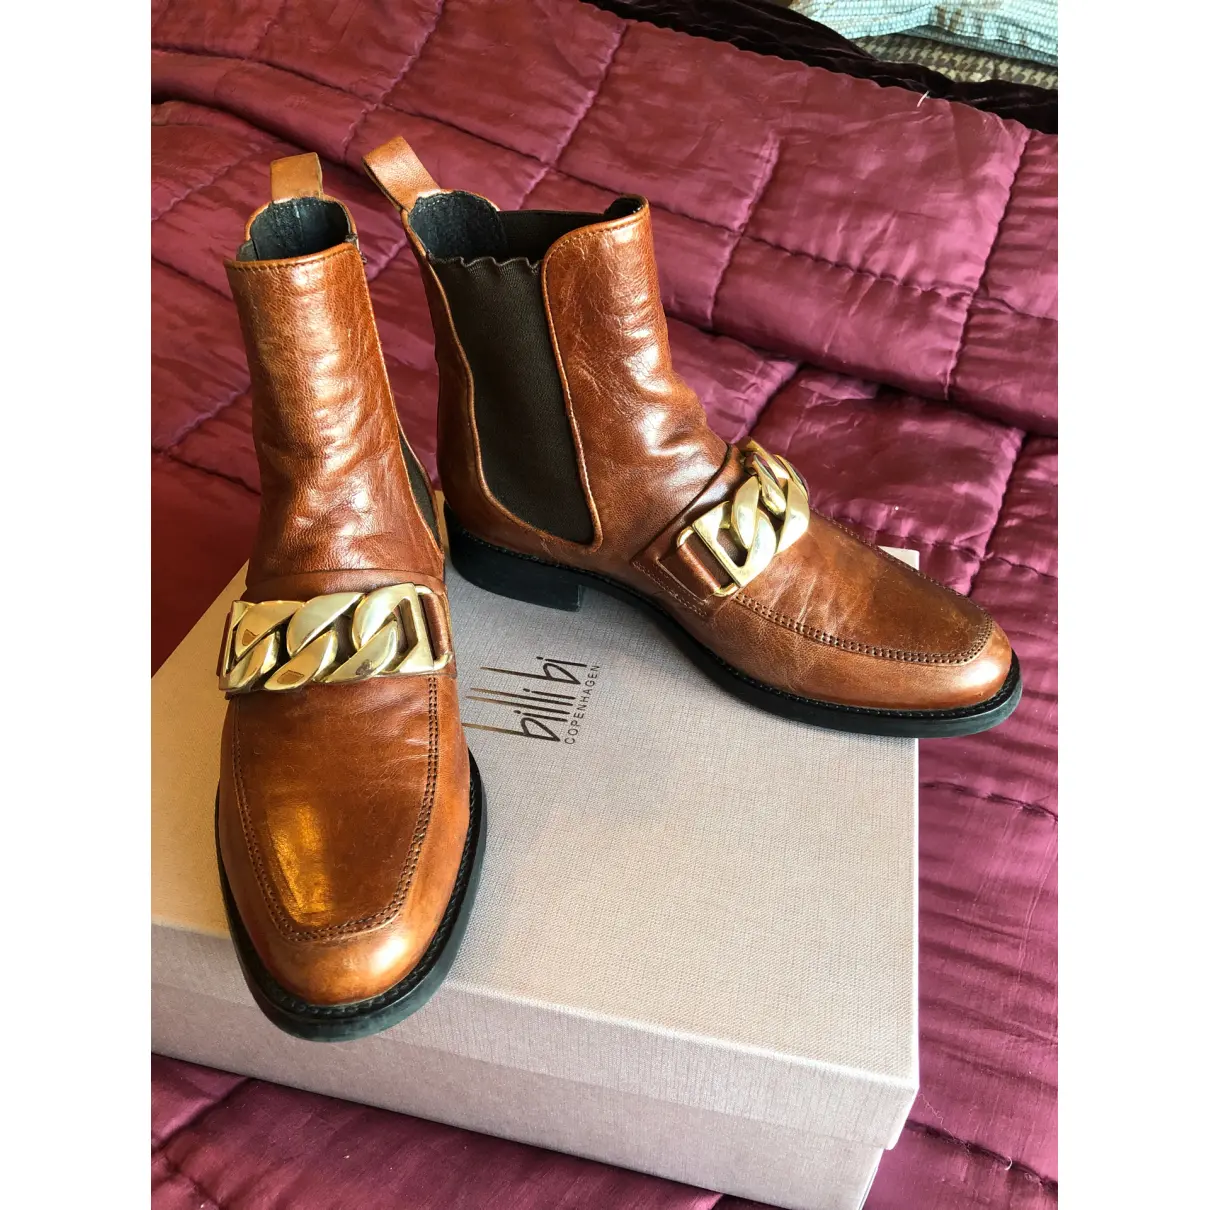 Buy Billi Bi Leather ankle boots online